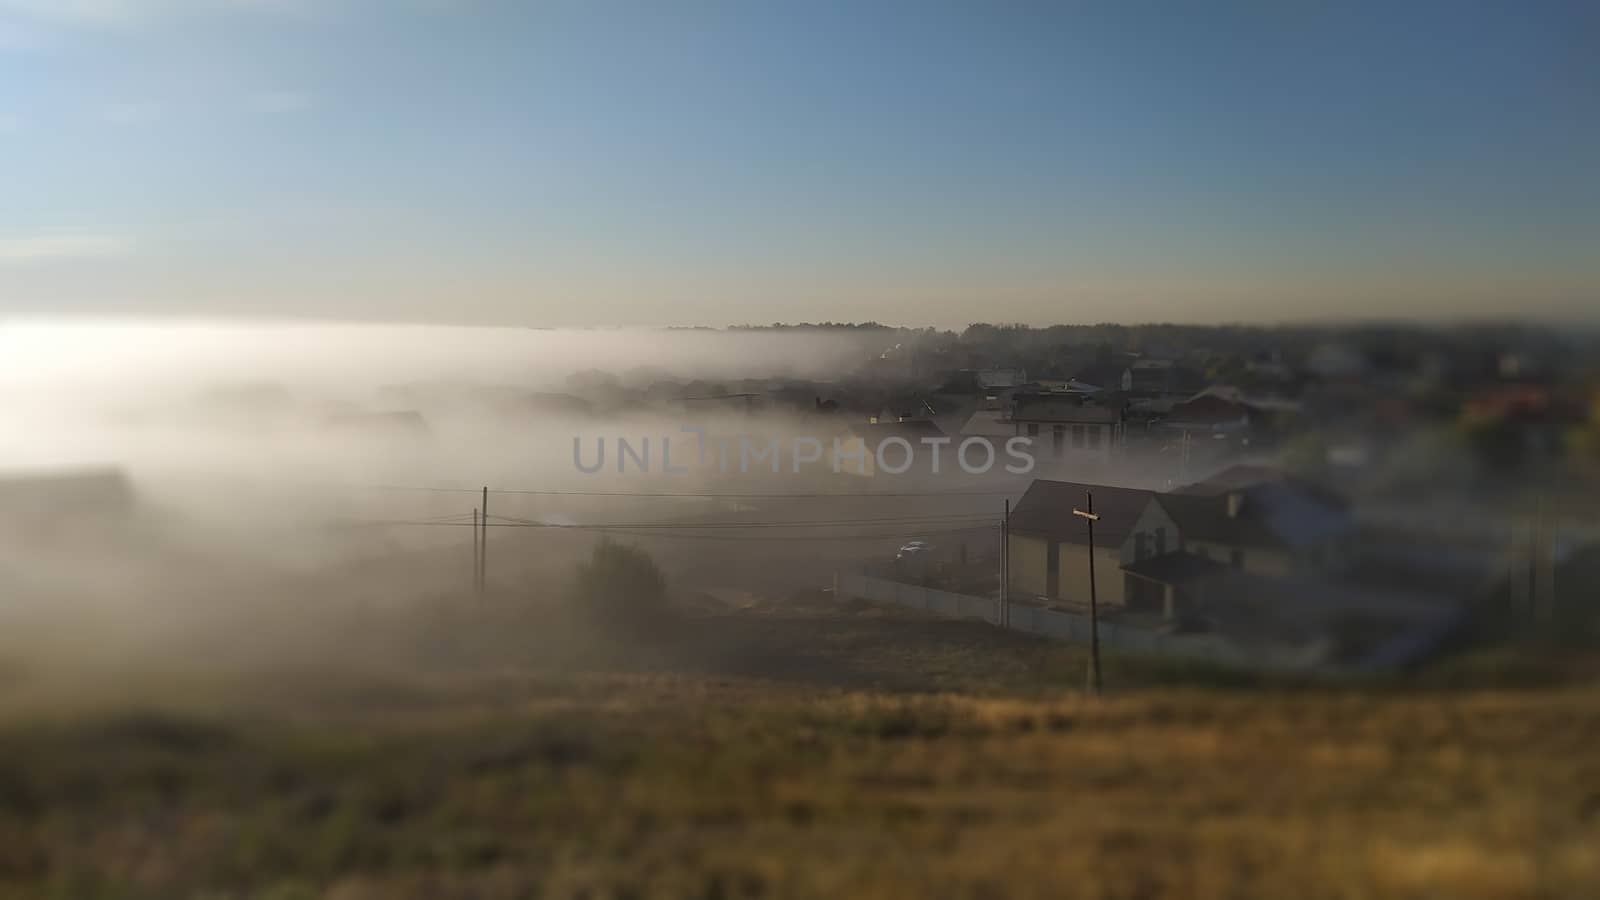 Early morning village in fog. Half village in fog.